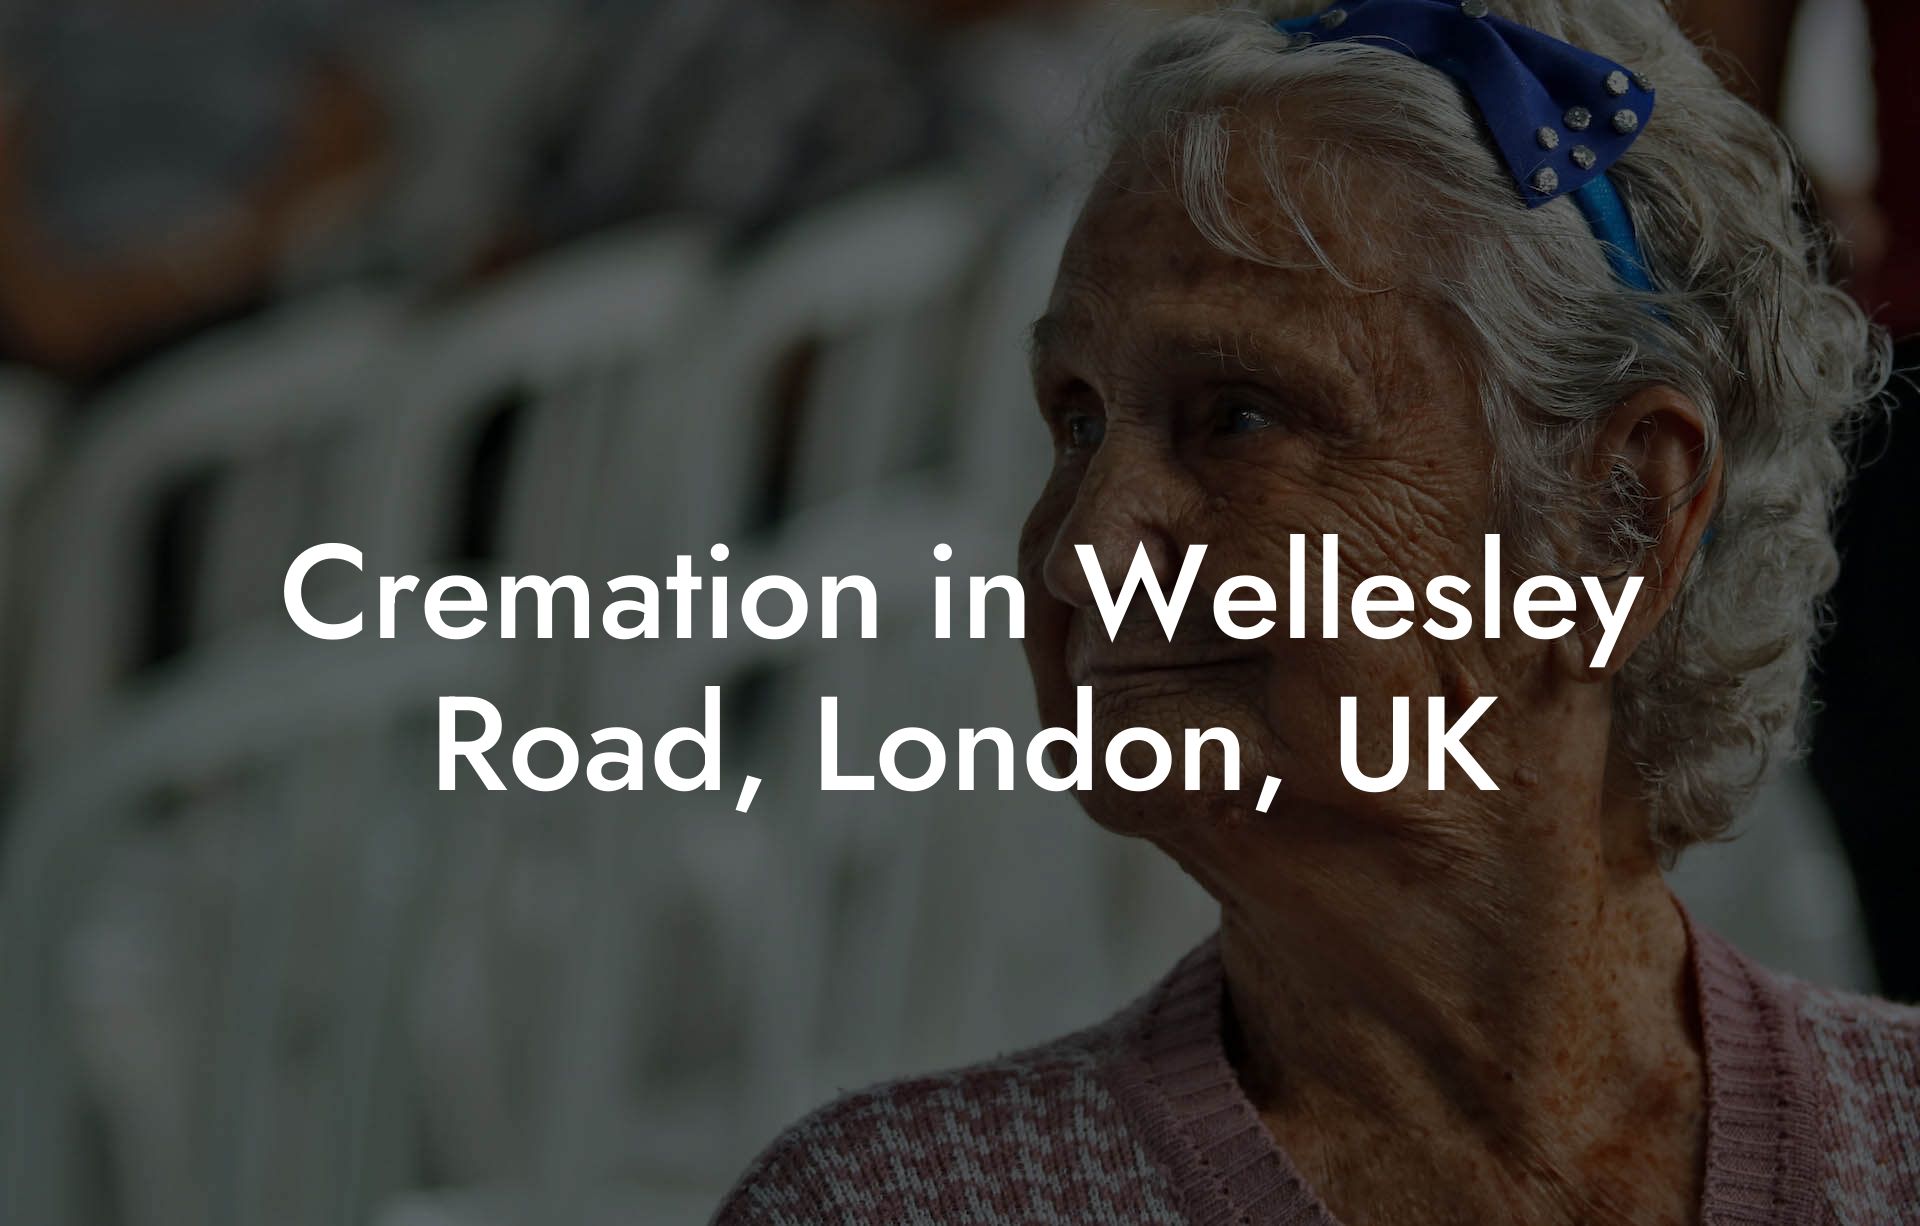 Cremation in Wellesley Road, London, UK